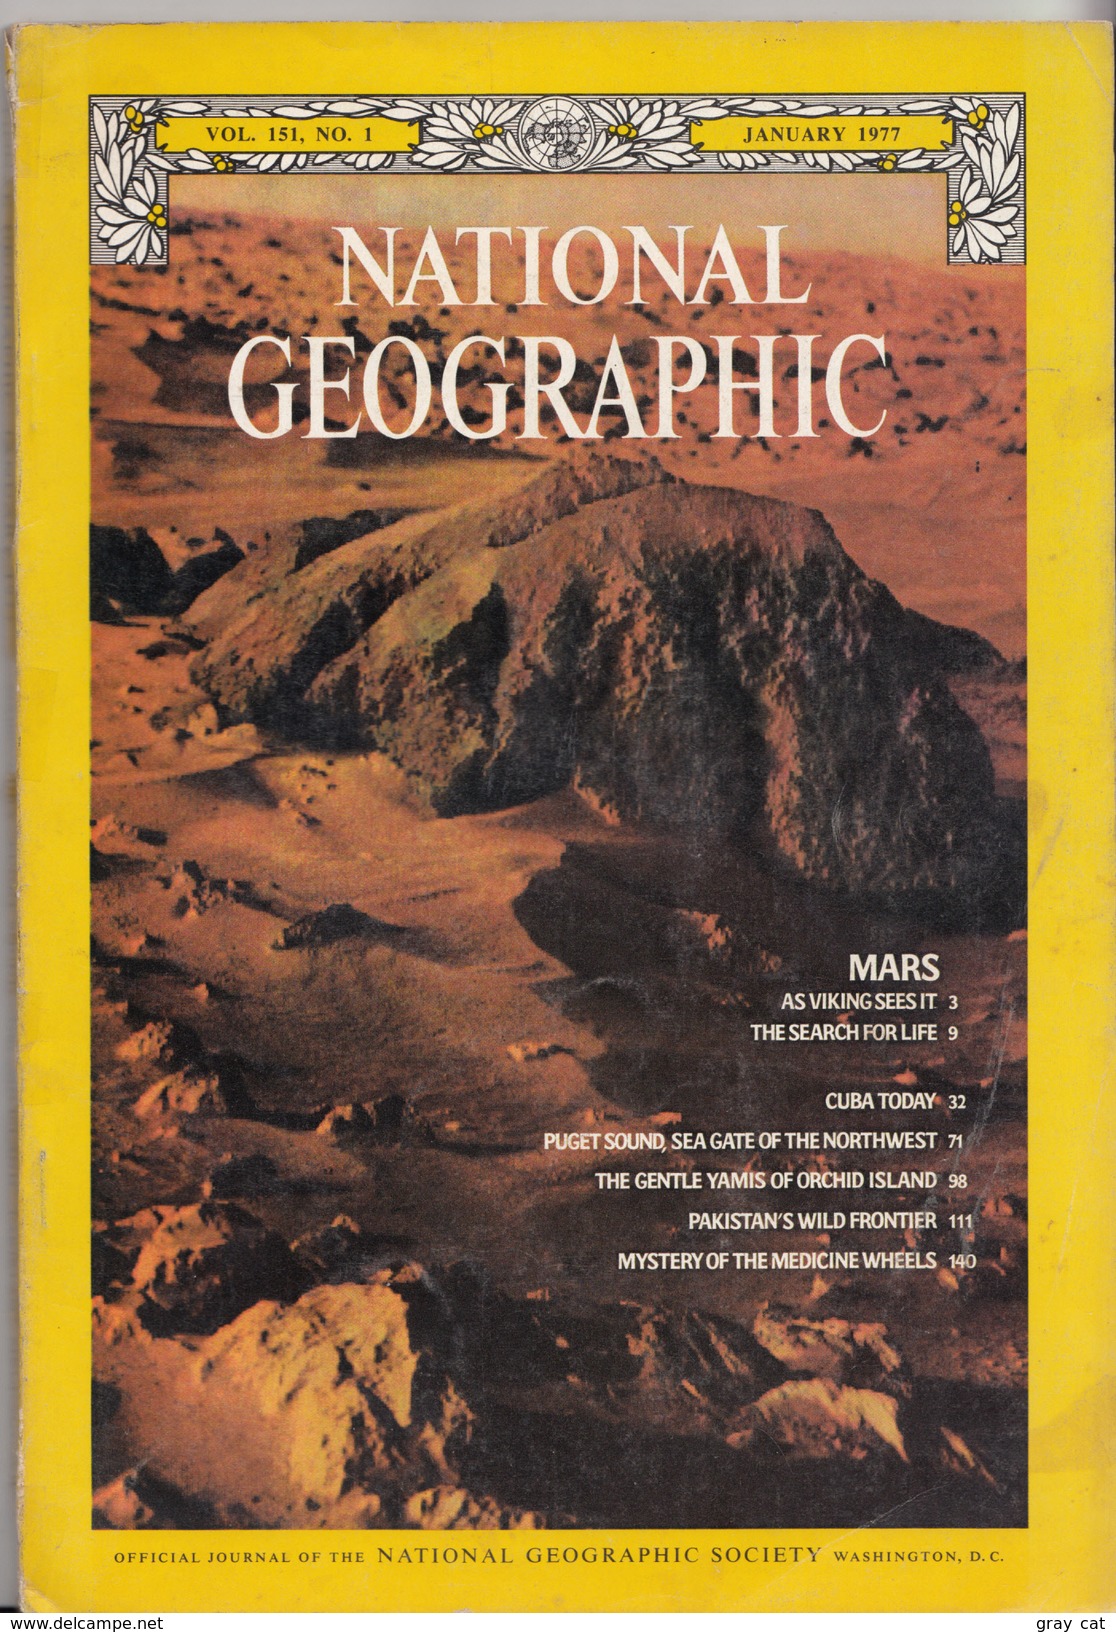 National Geographic Magazine Vol. 151, No. 1, January 1977 - Travel/ Exploration